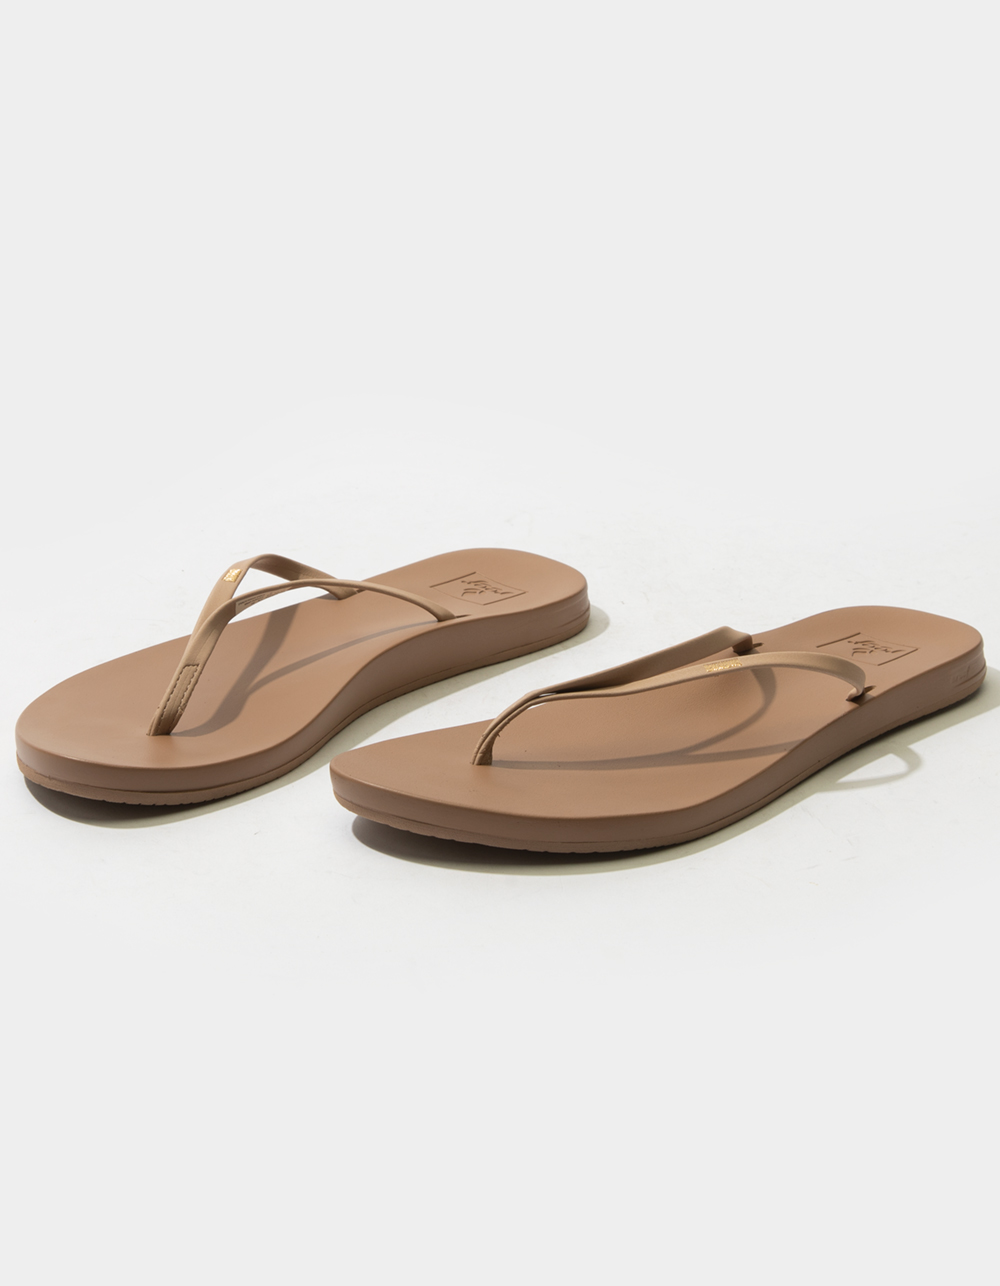 Women's Cushioned Sandals, Slides, & Flip Flops, REEF®